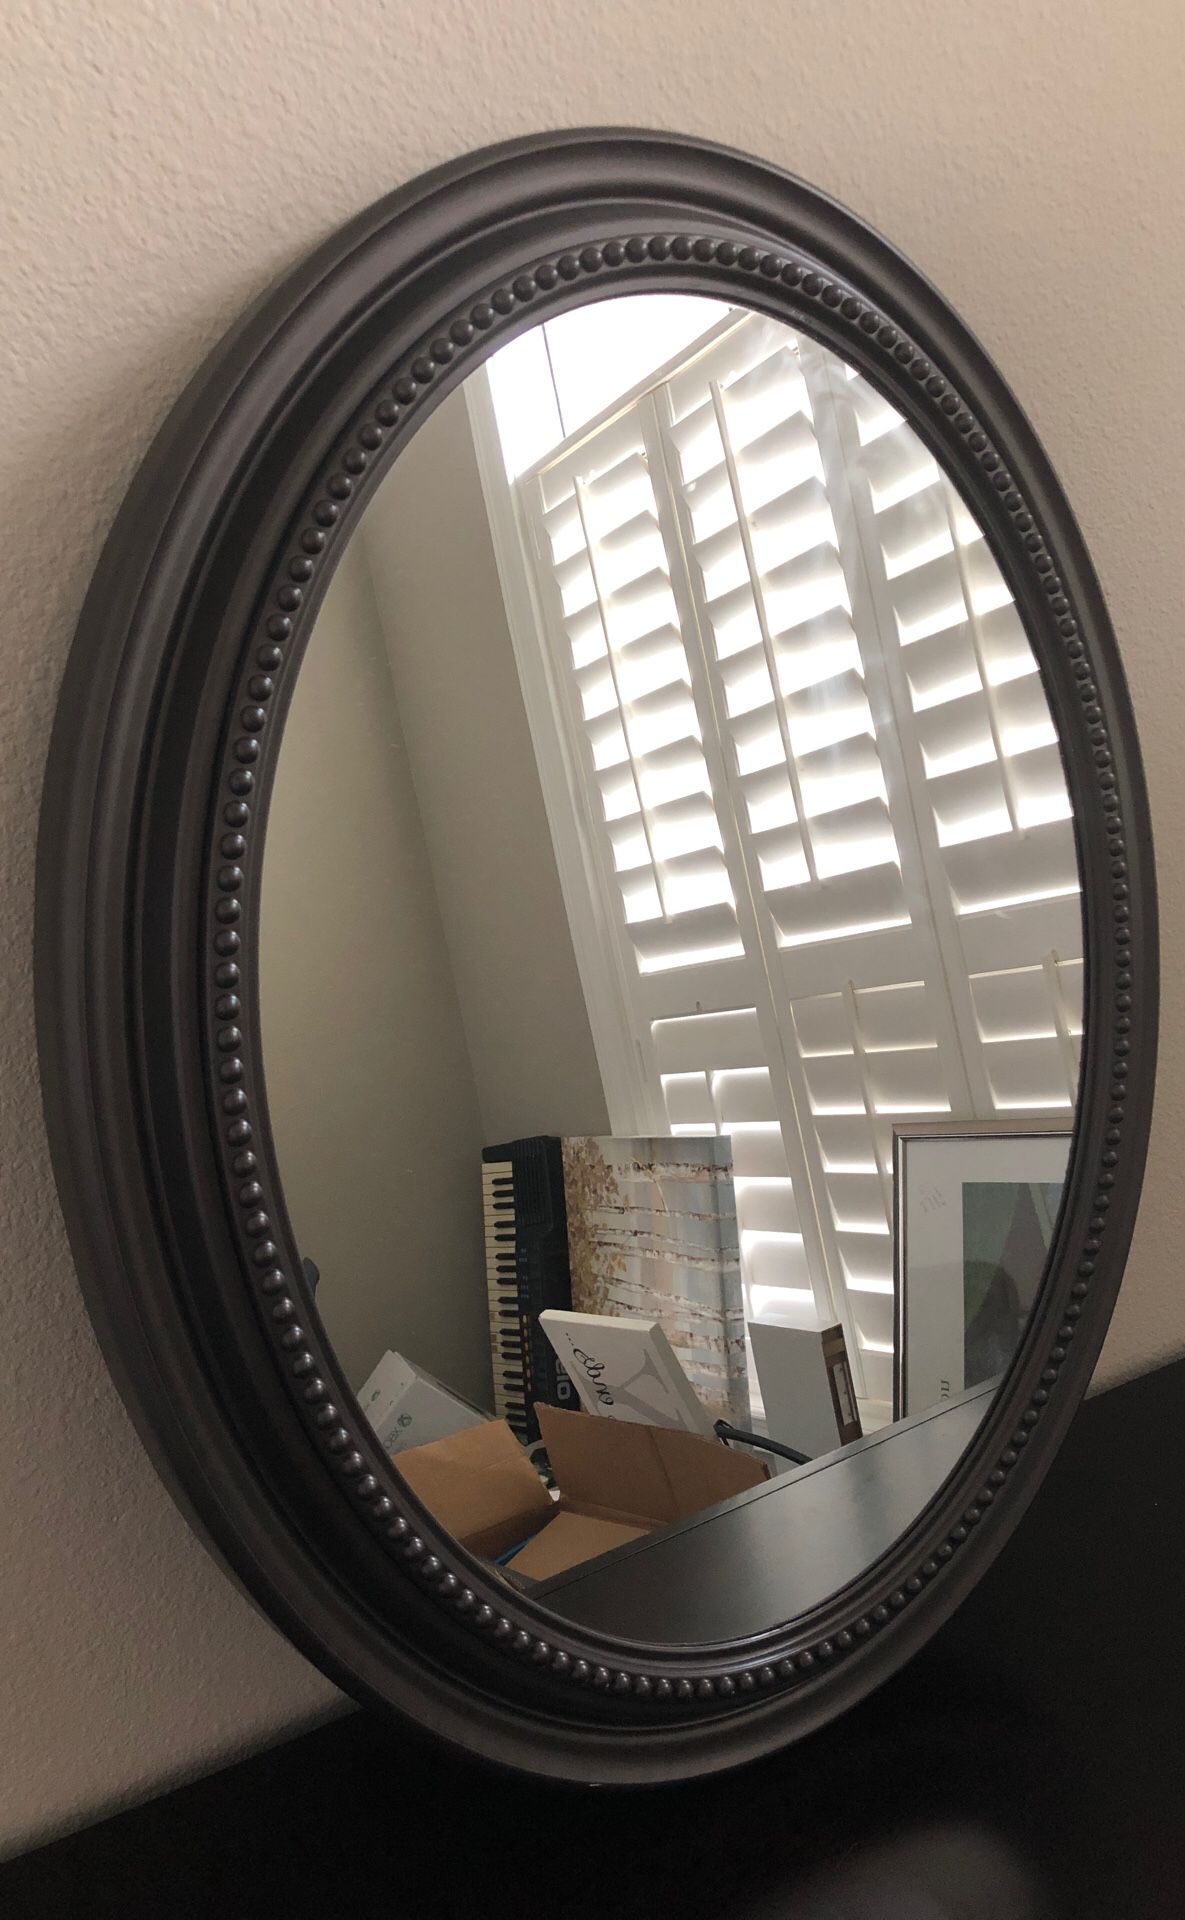 Wall decor mirror